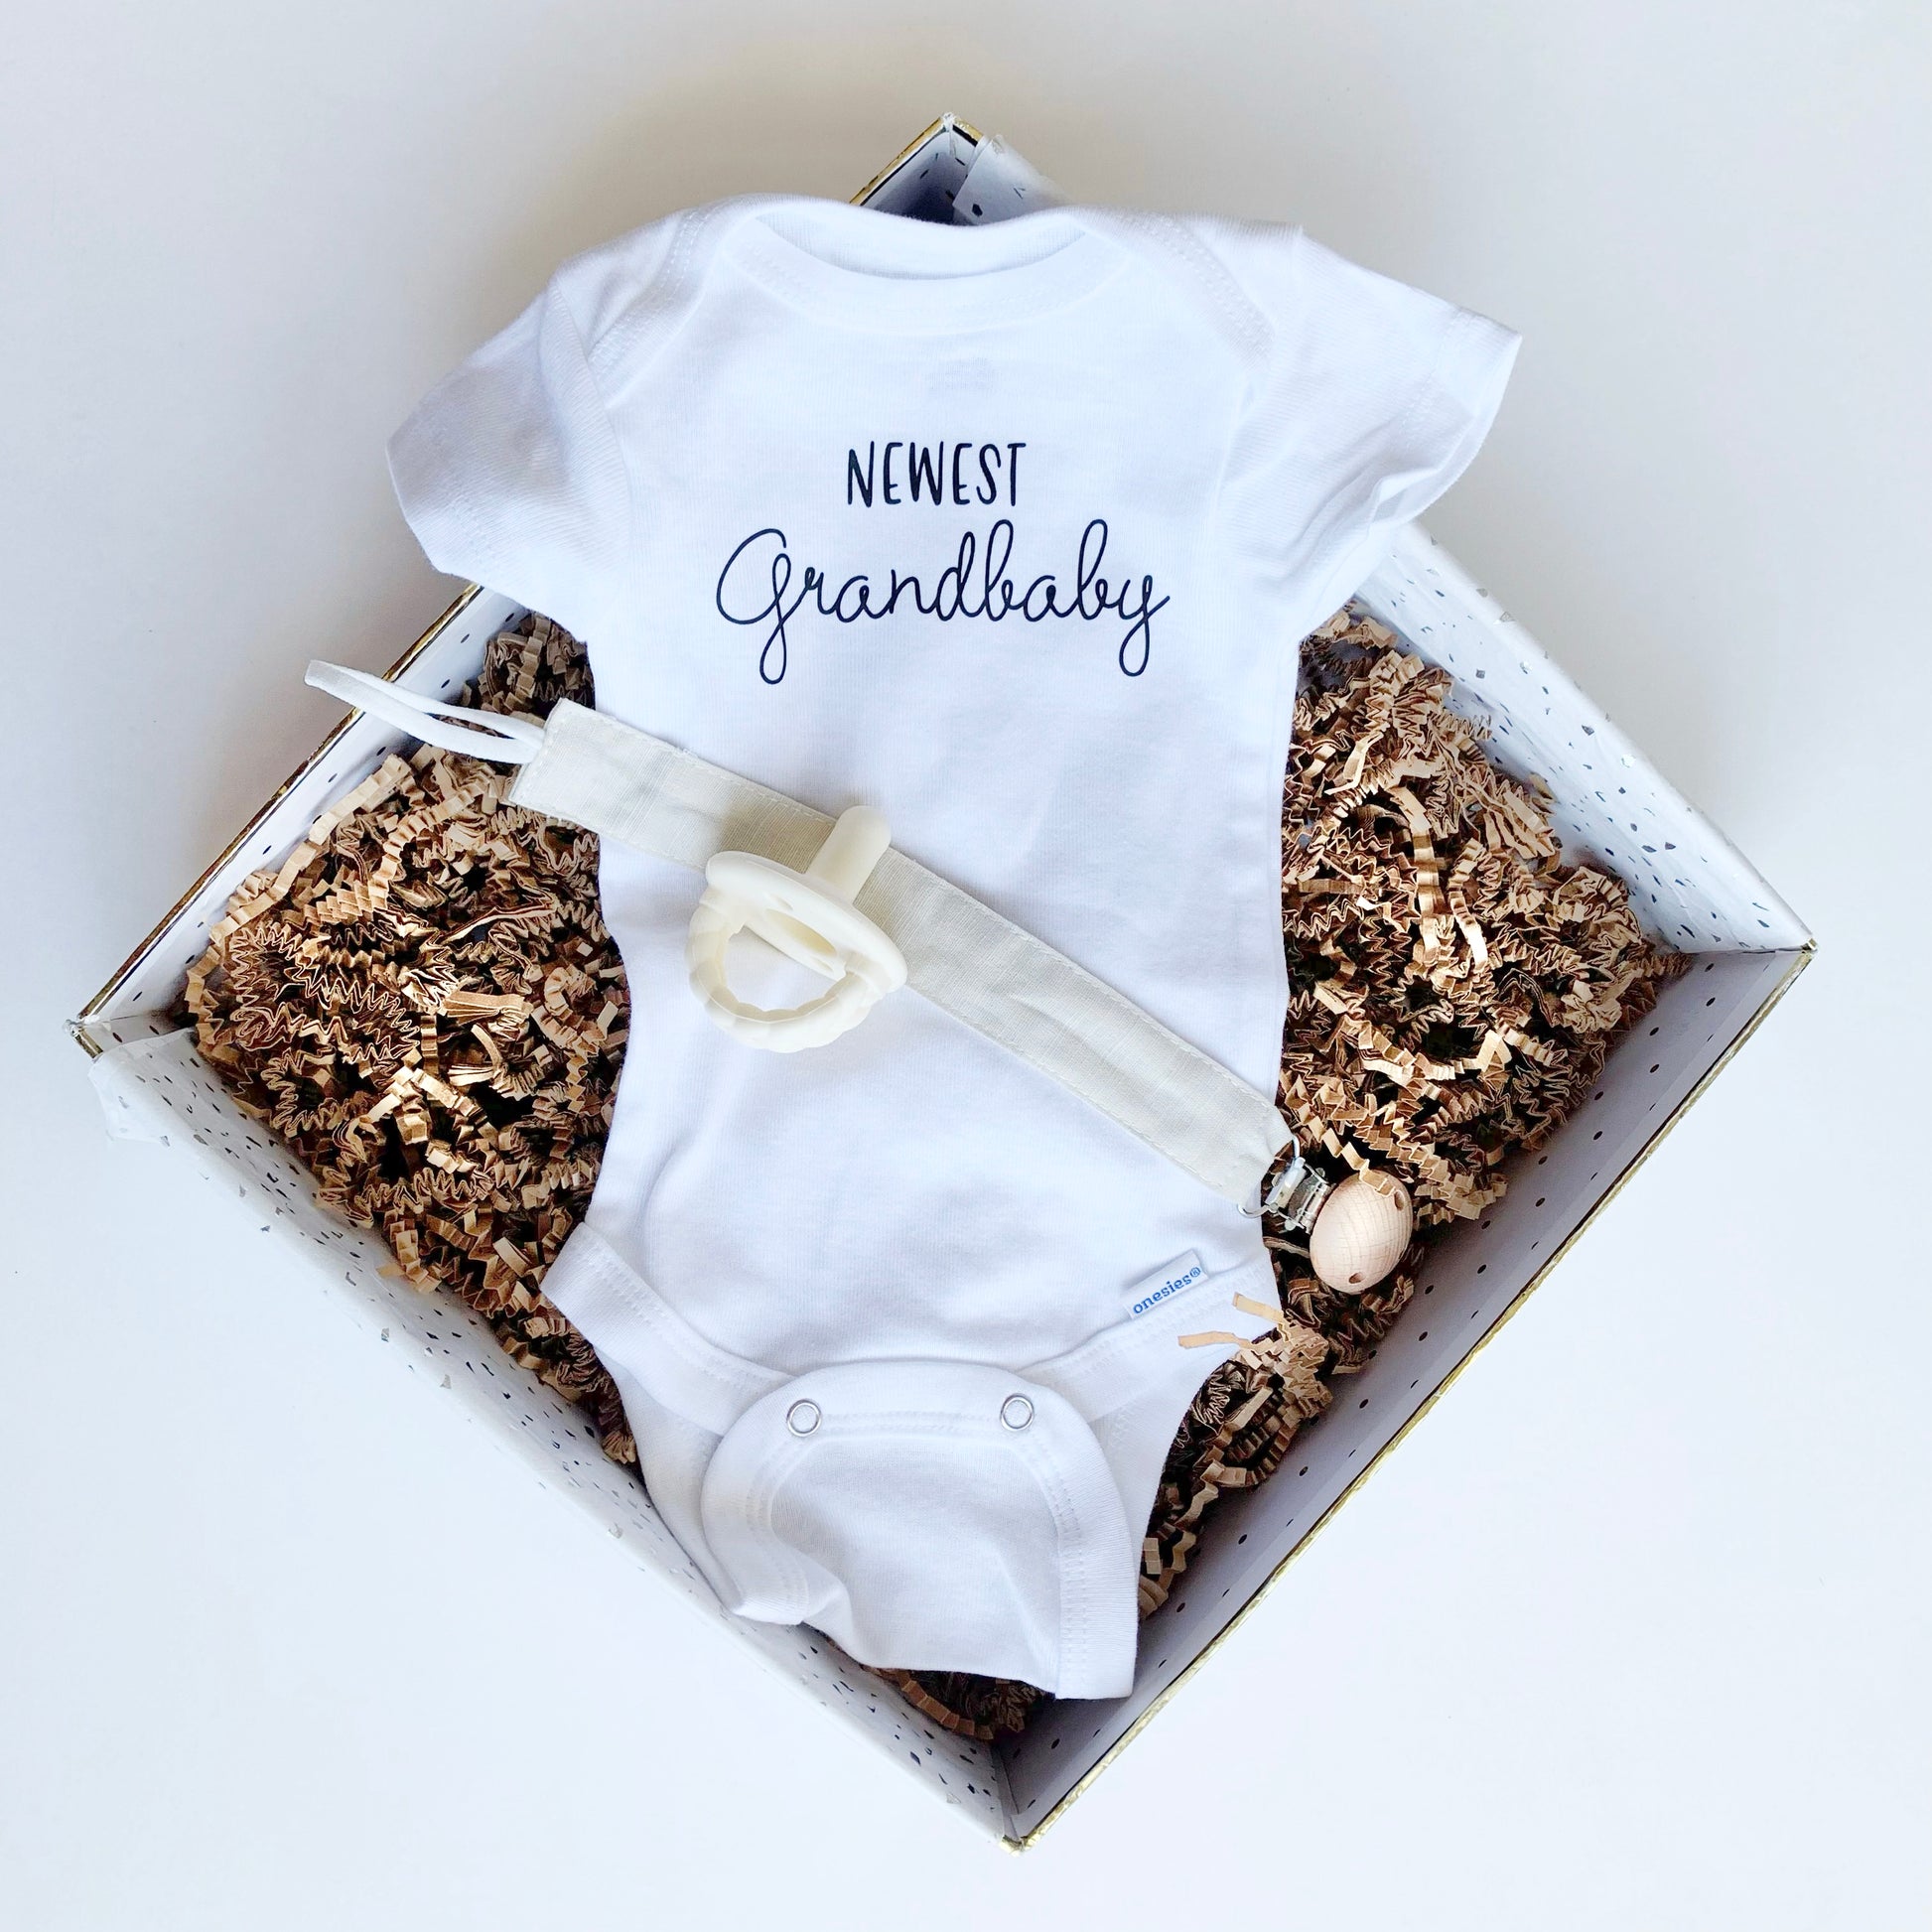 New Grandma Gift Set in Box - The Initial Design: gifts & monograms